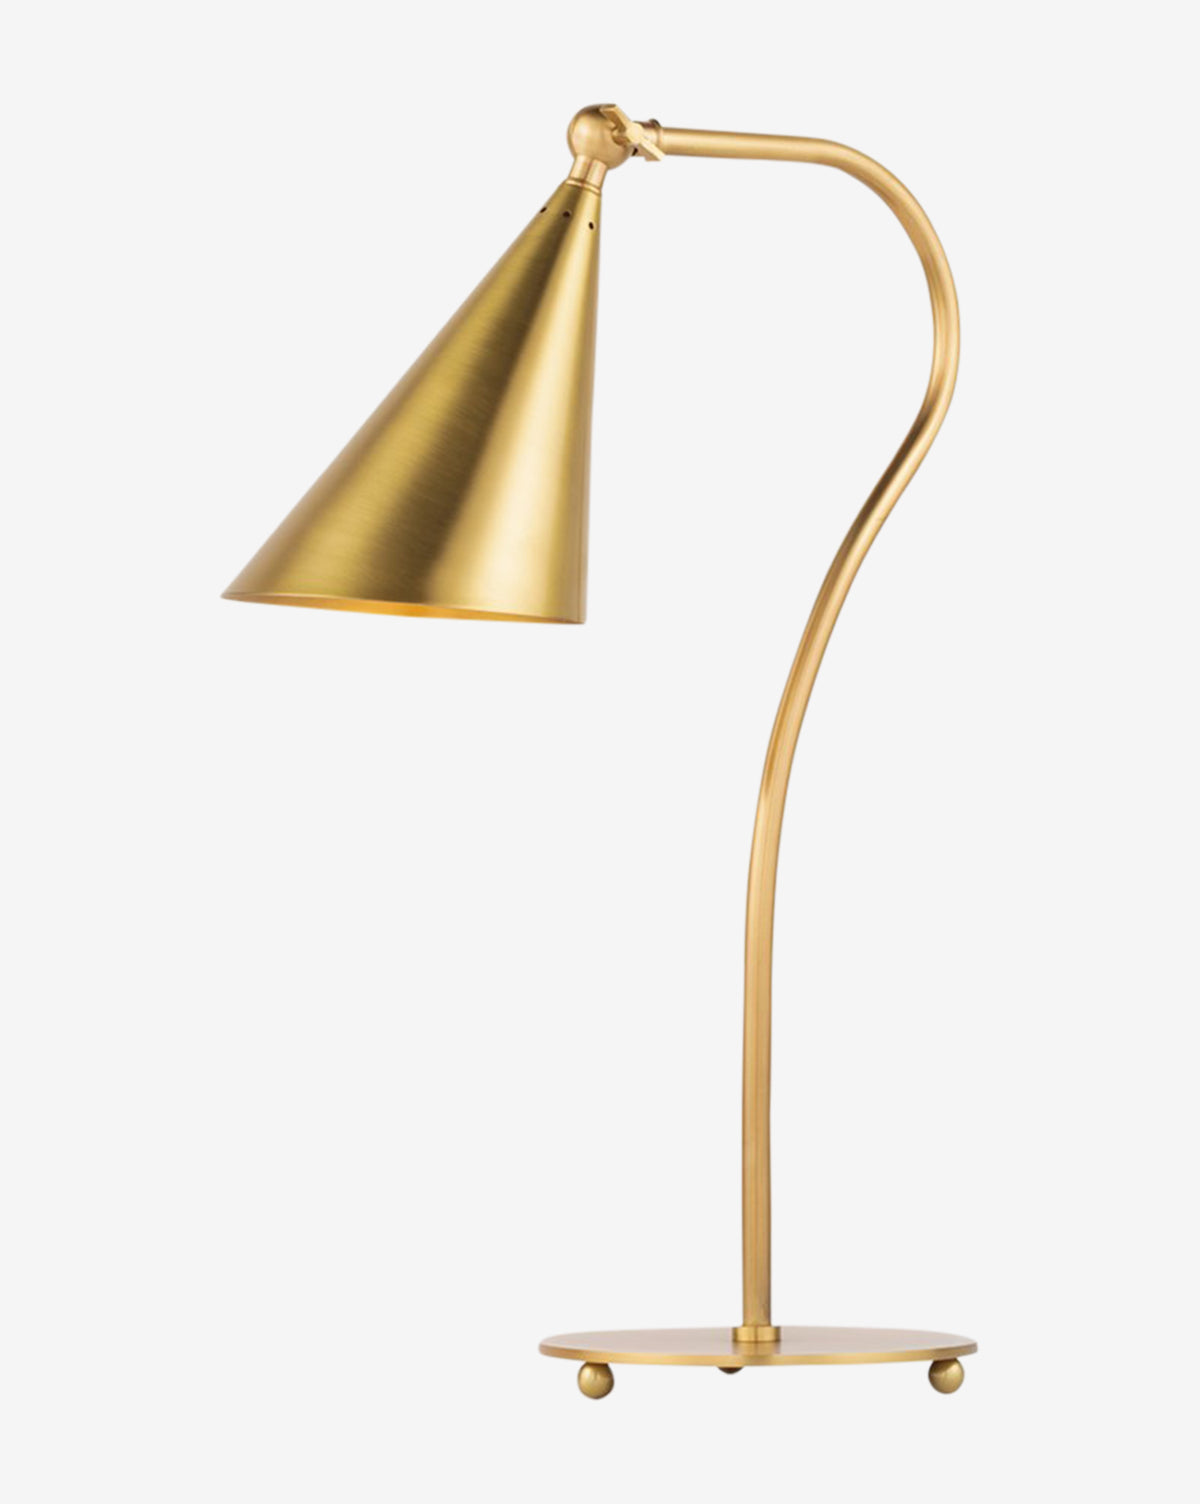 Hudson Valley Lighting, Lupe Table Lamp